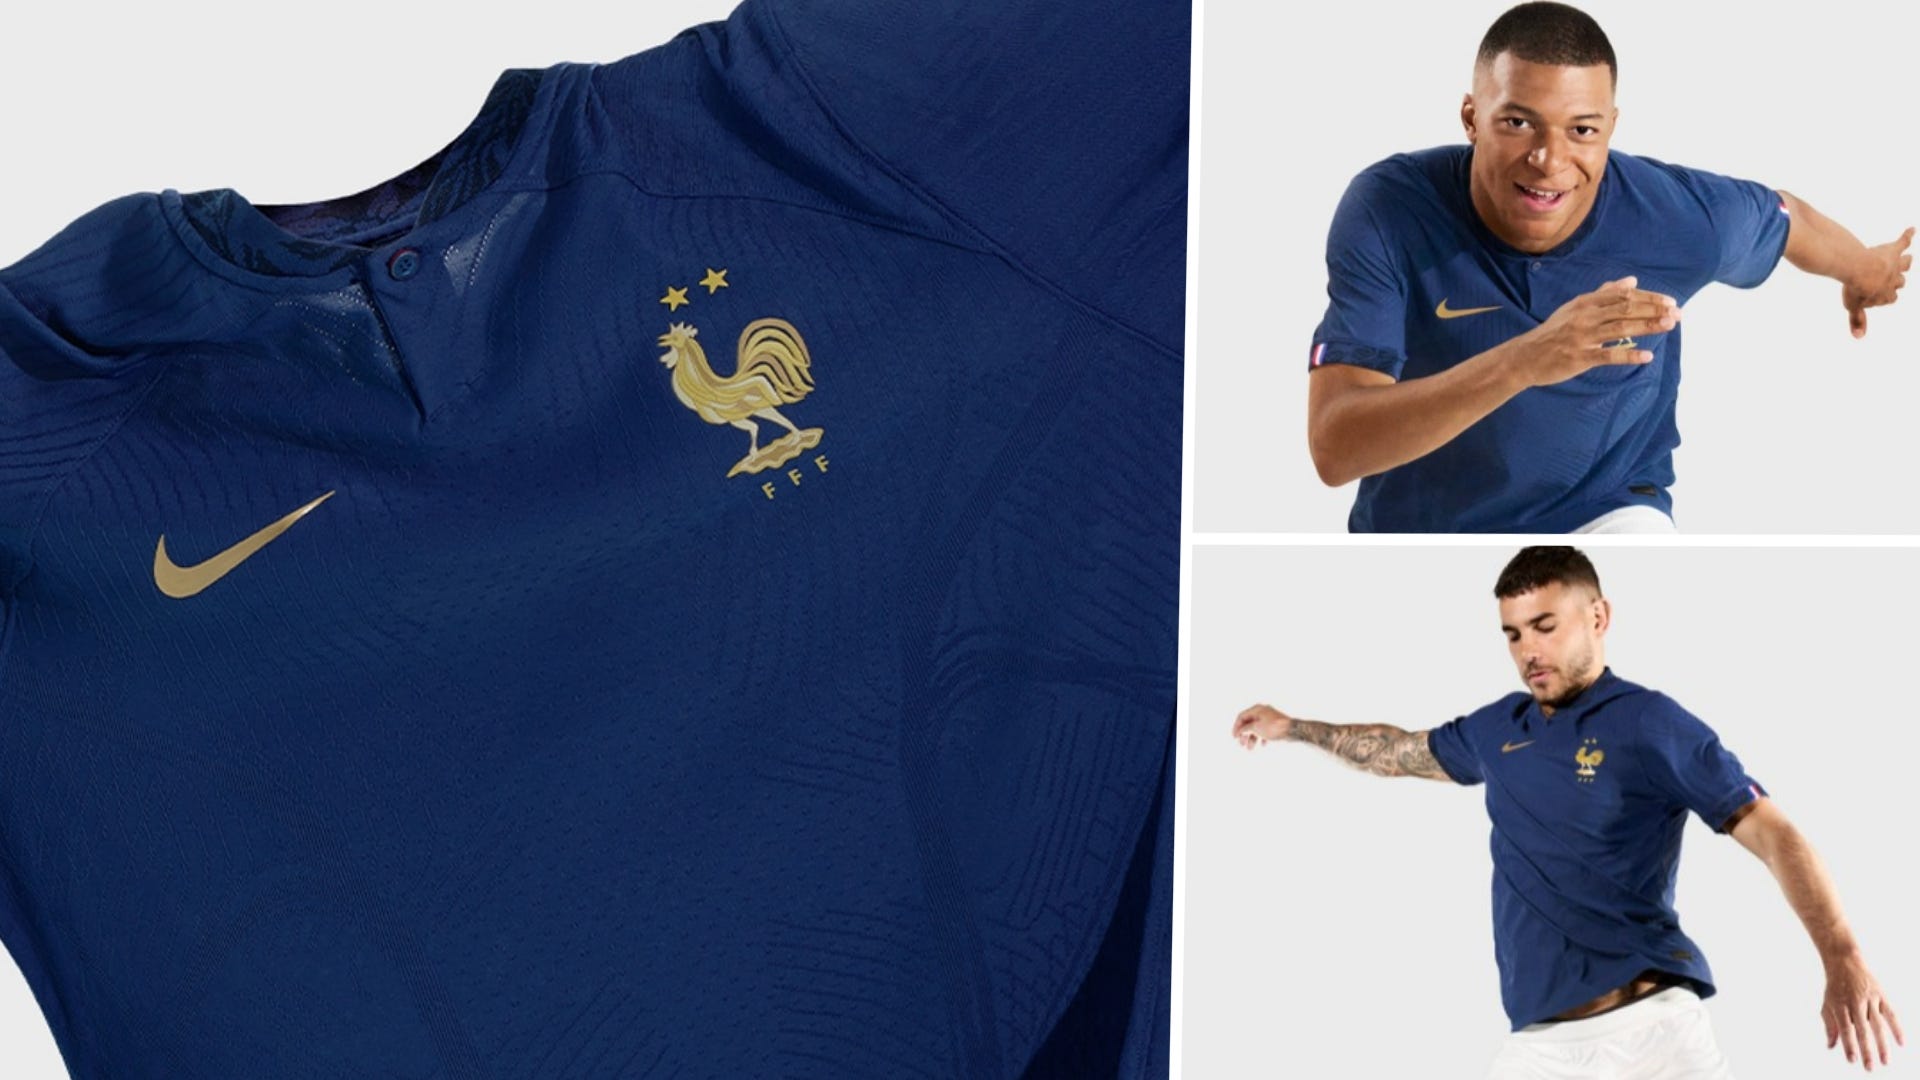 Freizeit T-Shirt BRASILIEN Nike immergrünes Wappen WM Katar 2022